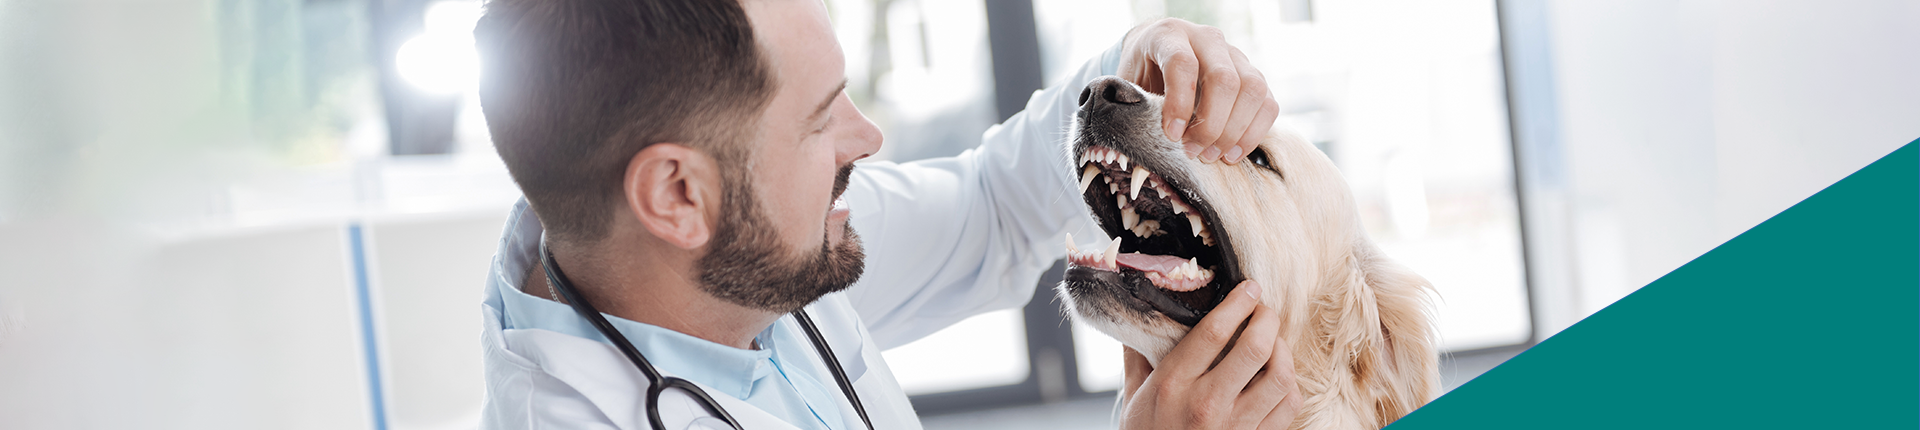 A doctor opens a dog's mouth and takes a joyful peek inside